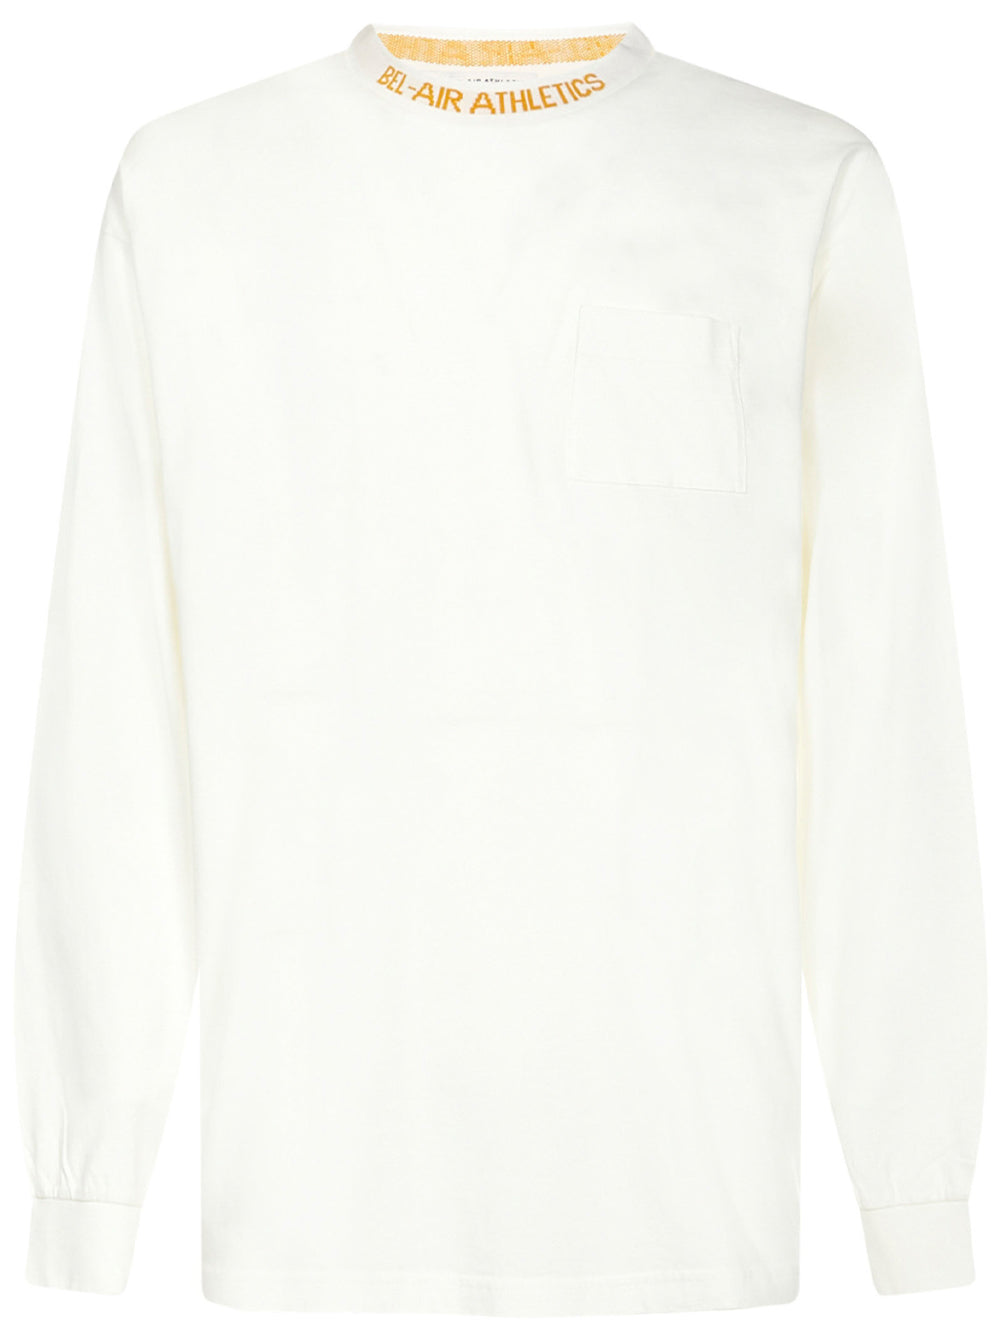 BEL-AIR ATHLETICS Academy Crest Long Sleeve T-Shirt White - MAISONDEFASHION.COM